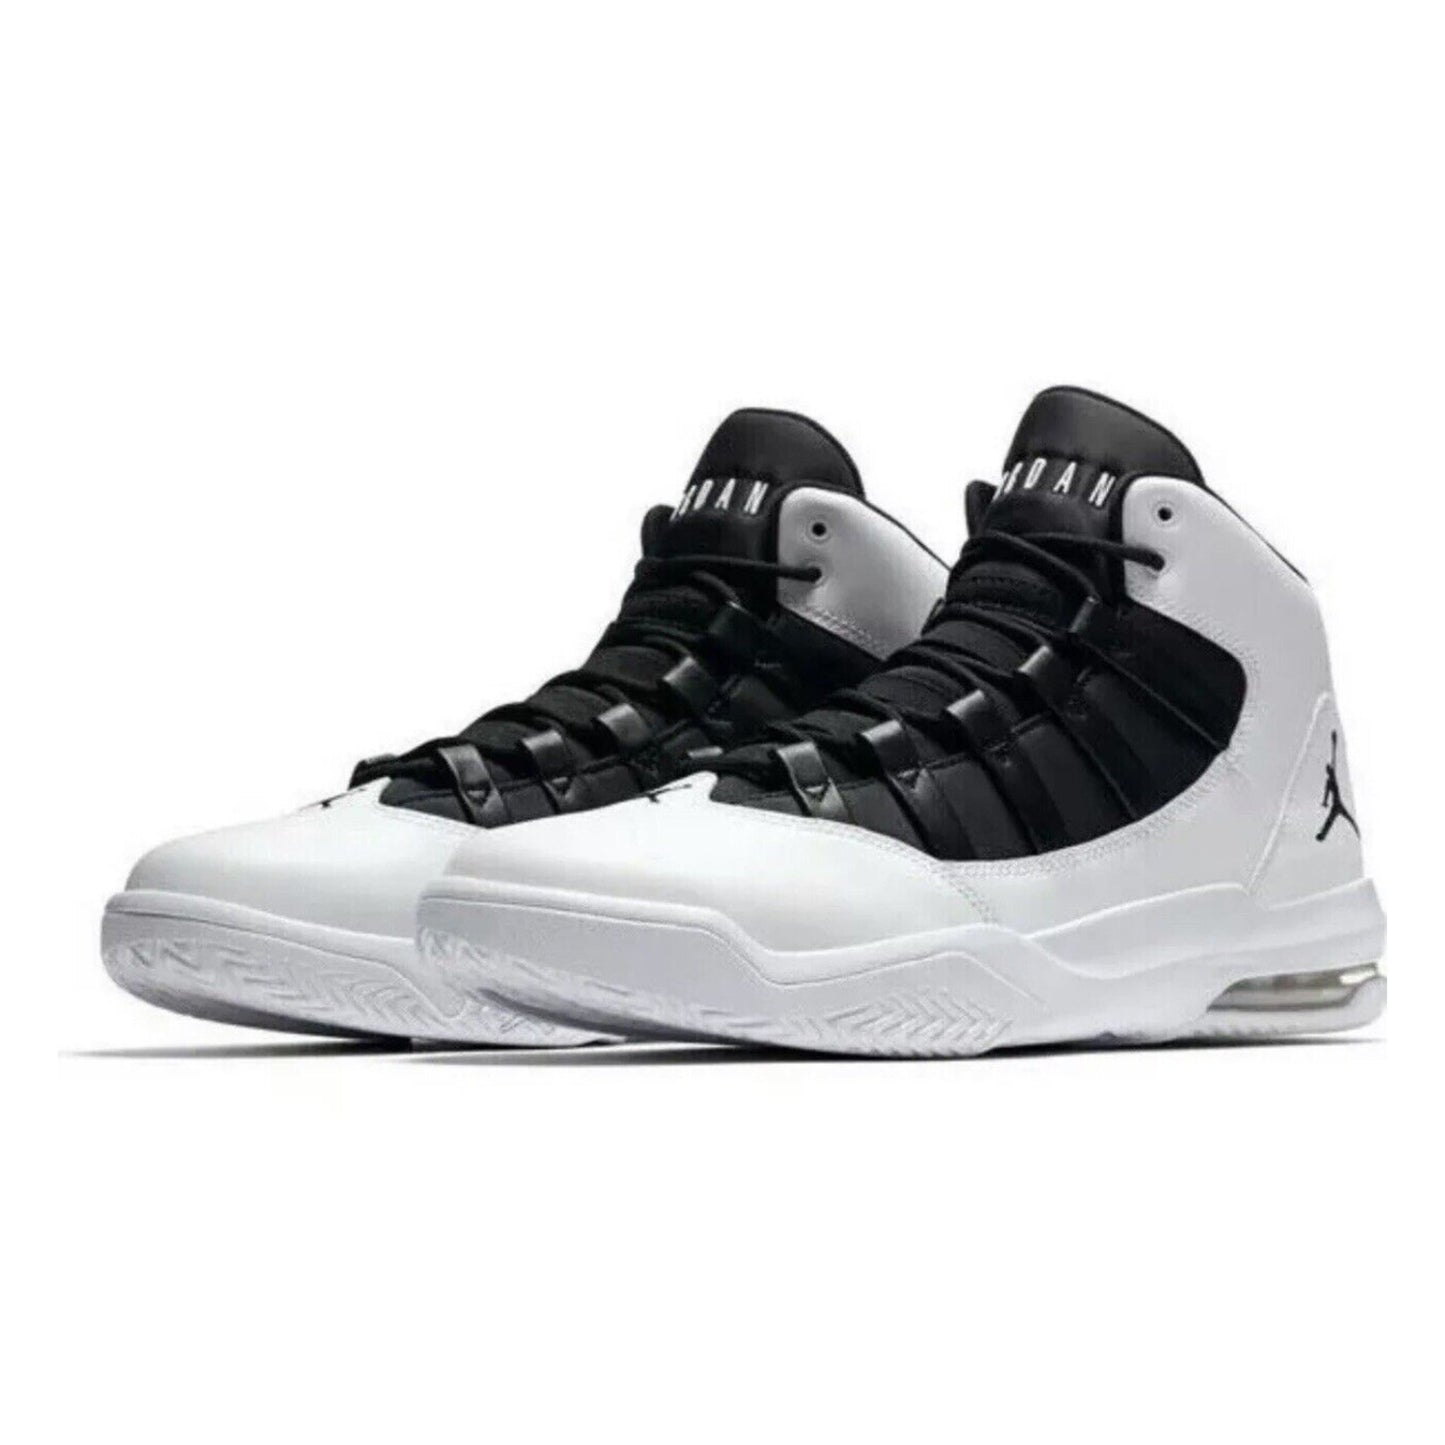 Nike Air Jordan Max Aura Basketball Shoes Black White